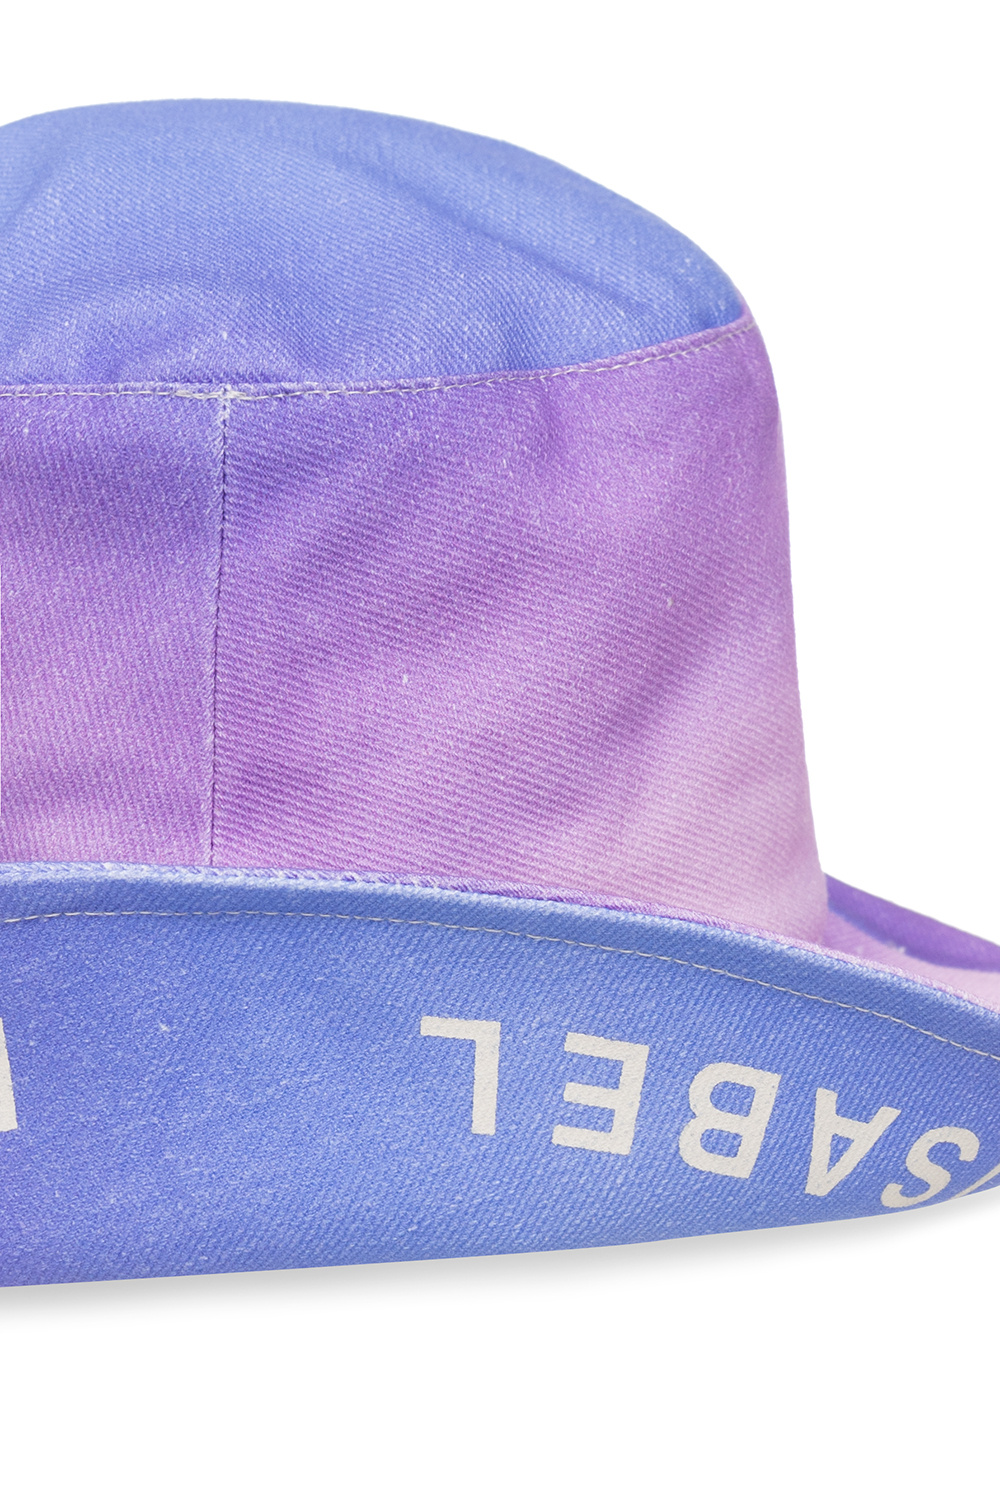 discount 63% WOMEN FASHION Accessories Hat and cap Purple NoName hat and cap Purple Single 